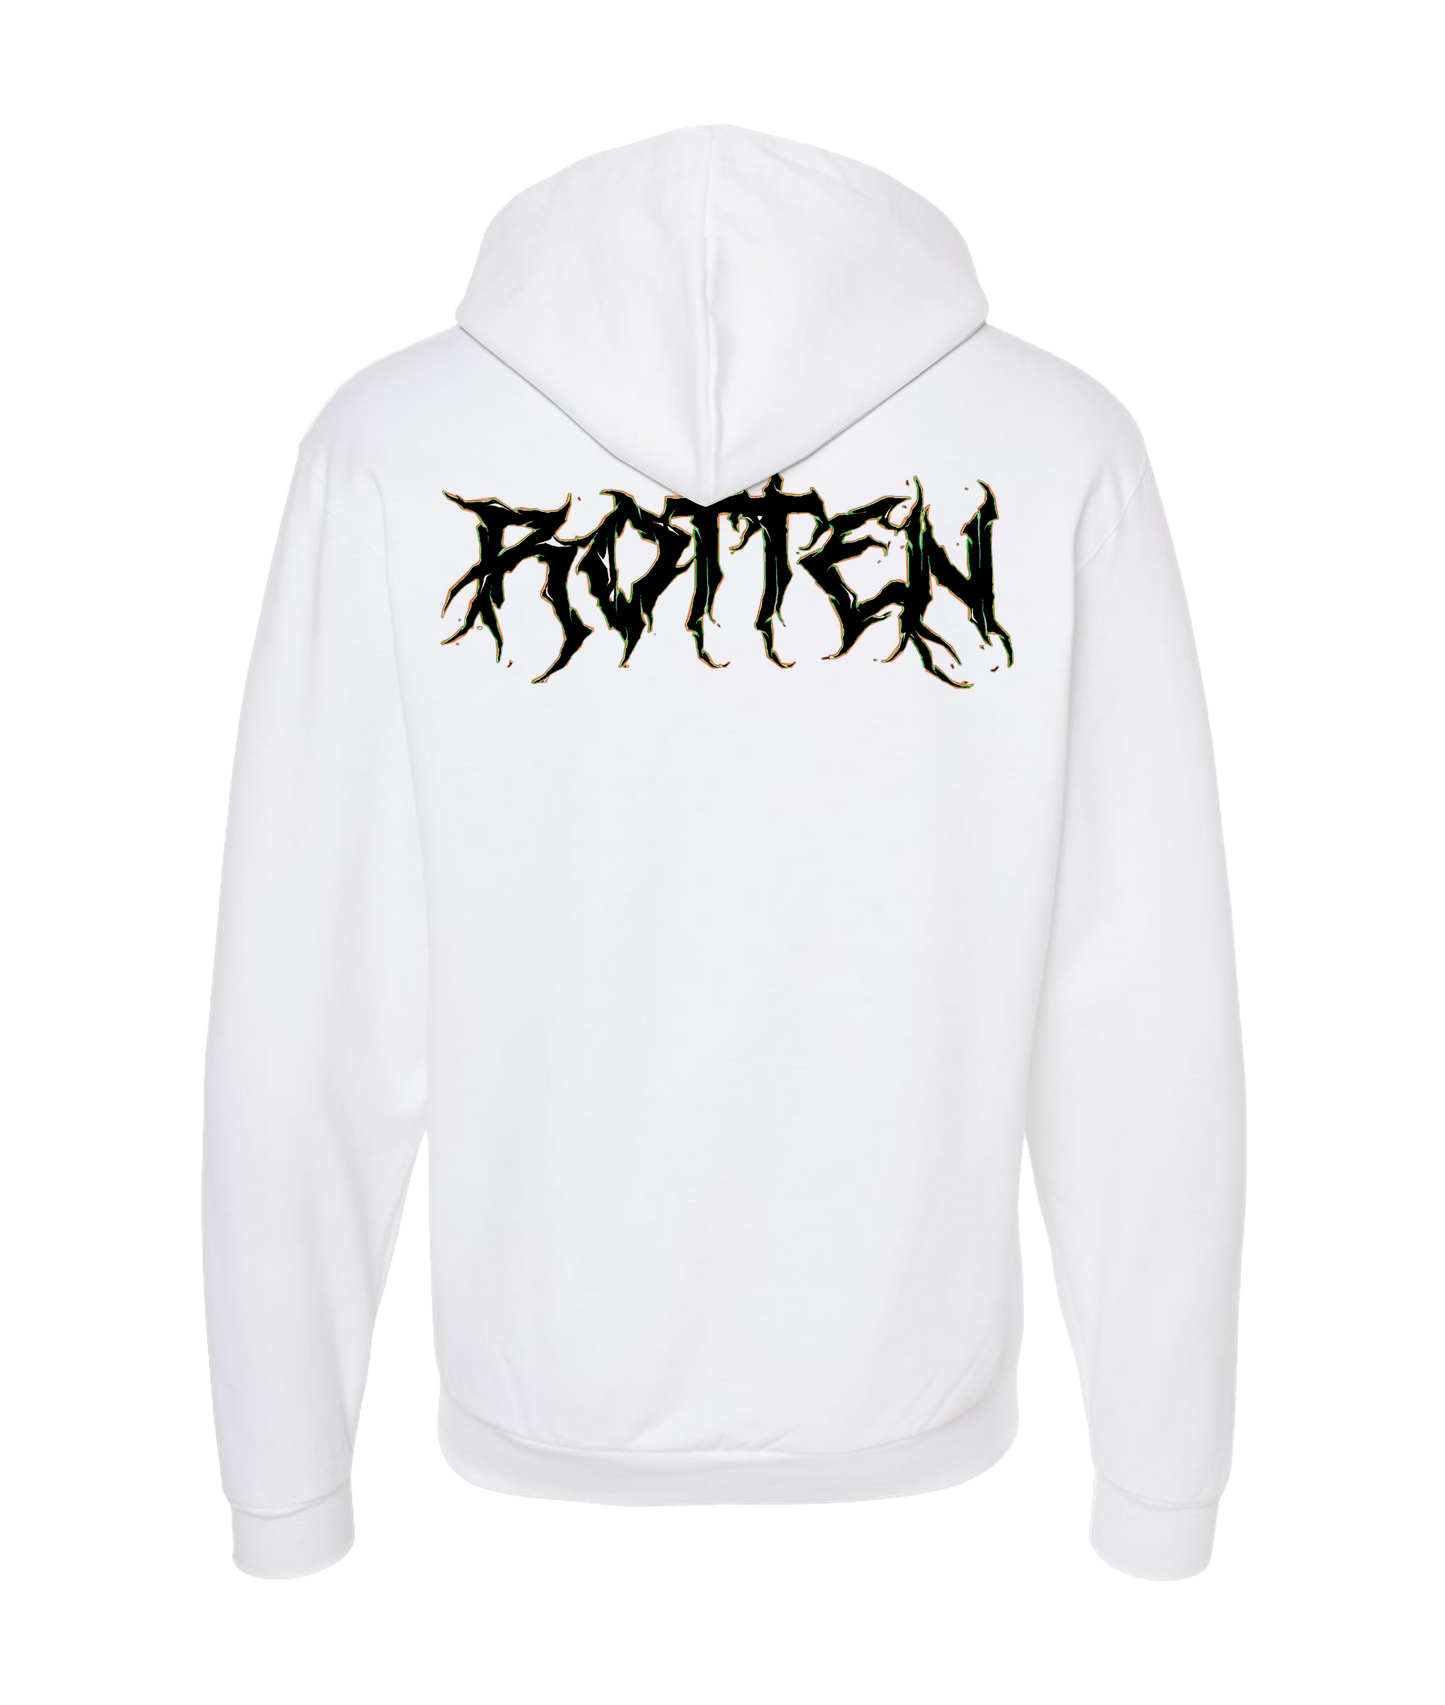 Rotten - Logo - White Zip Up Hoodie